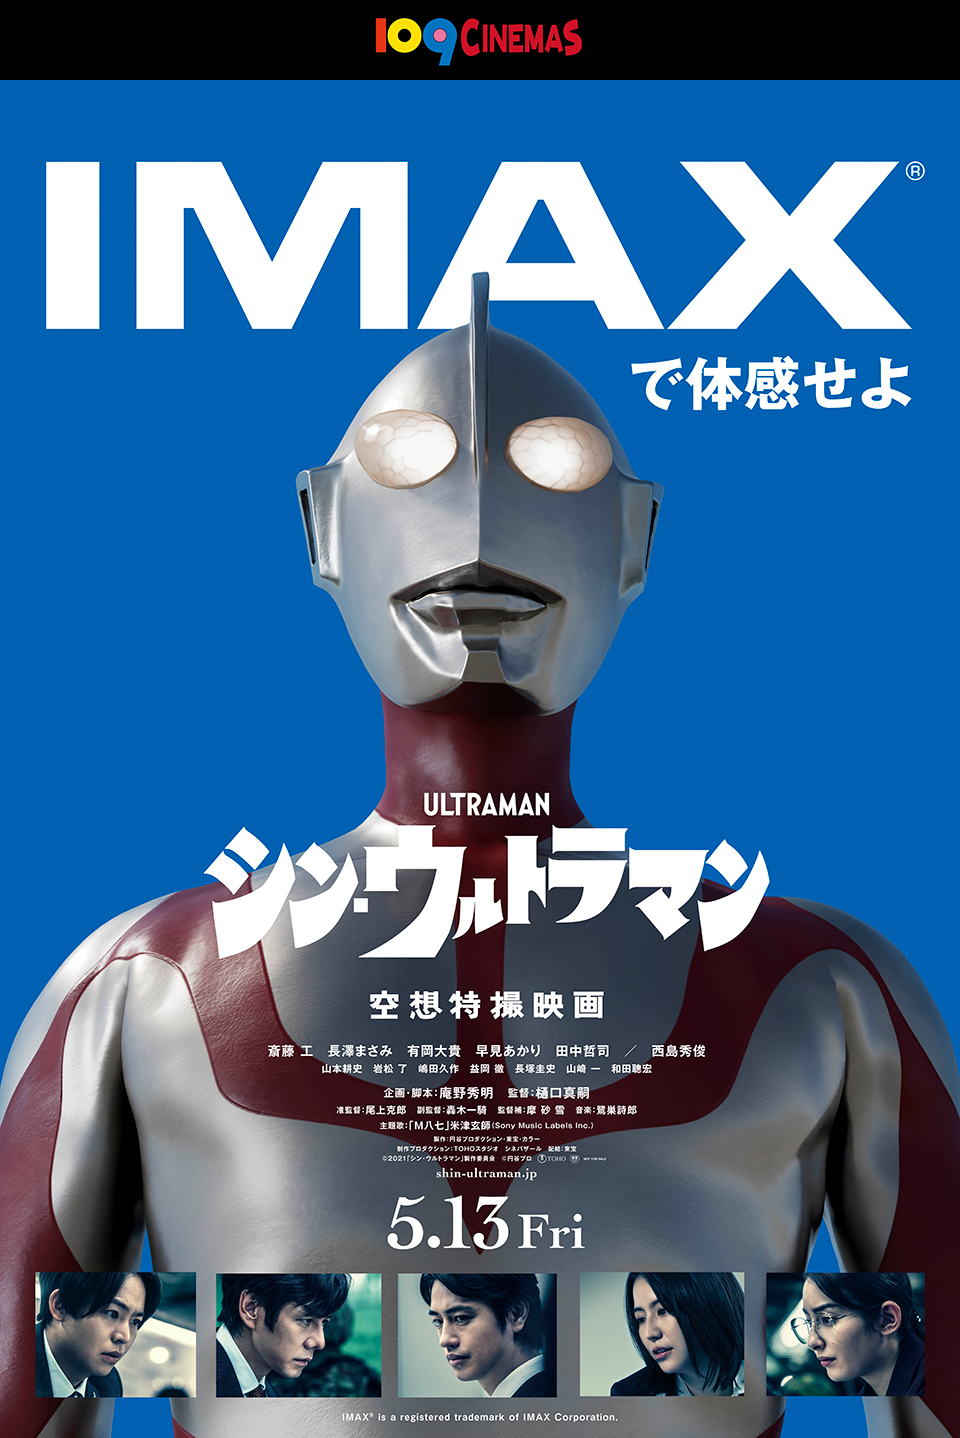 IMAX®で体感せよ『シン・ウルトラマン』空想特撮映画